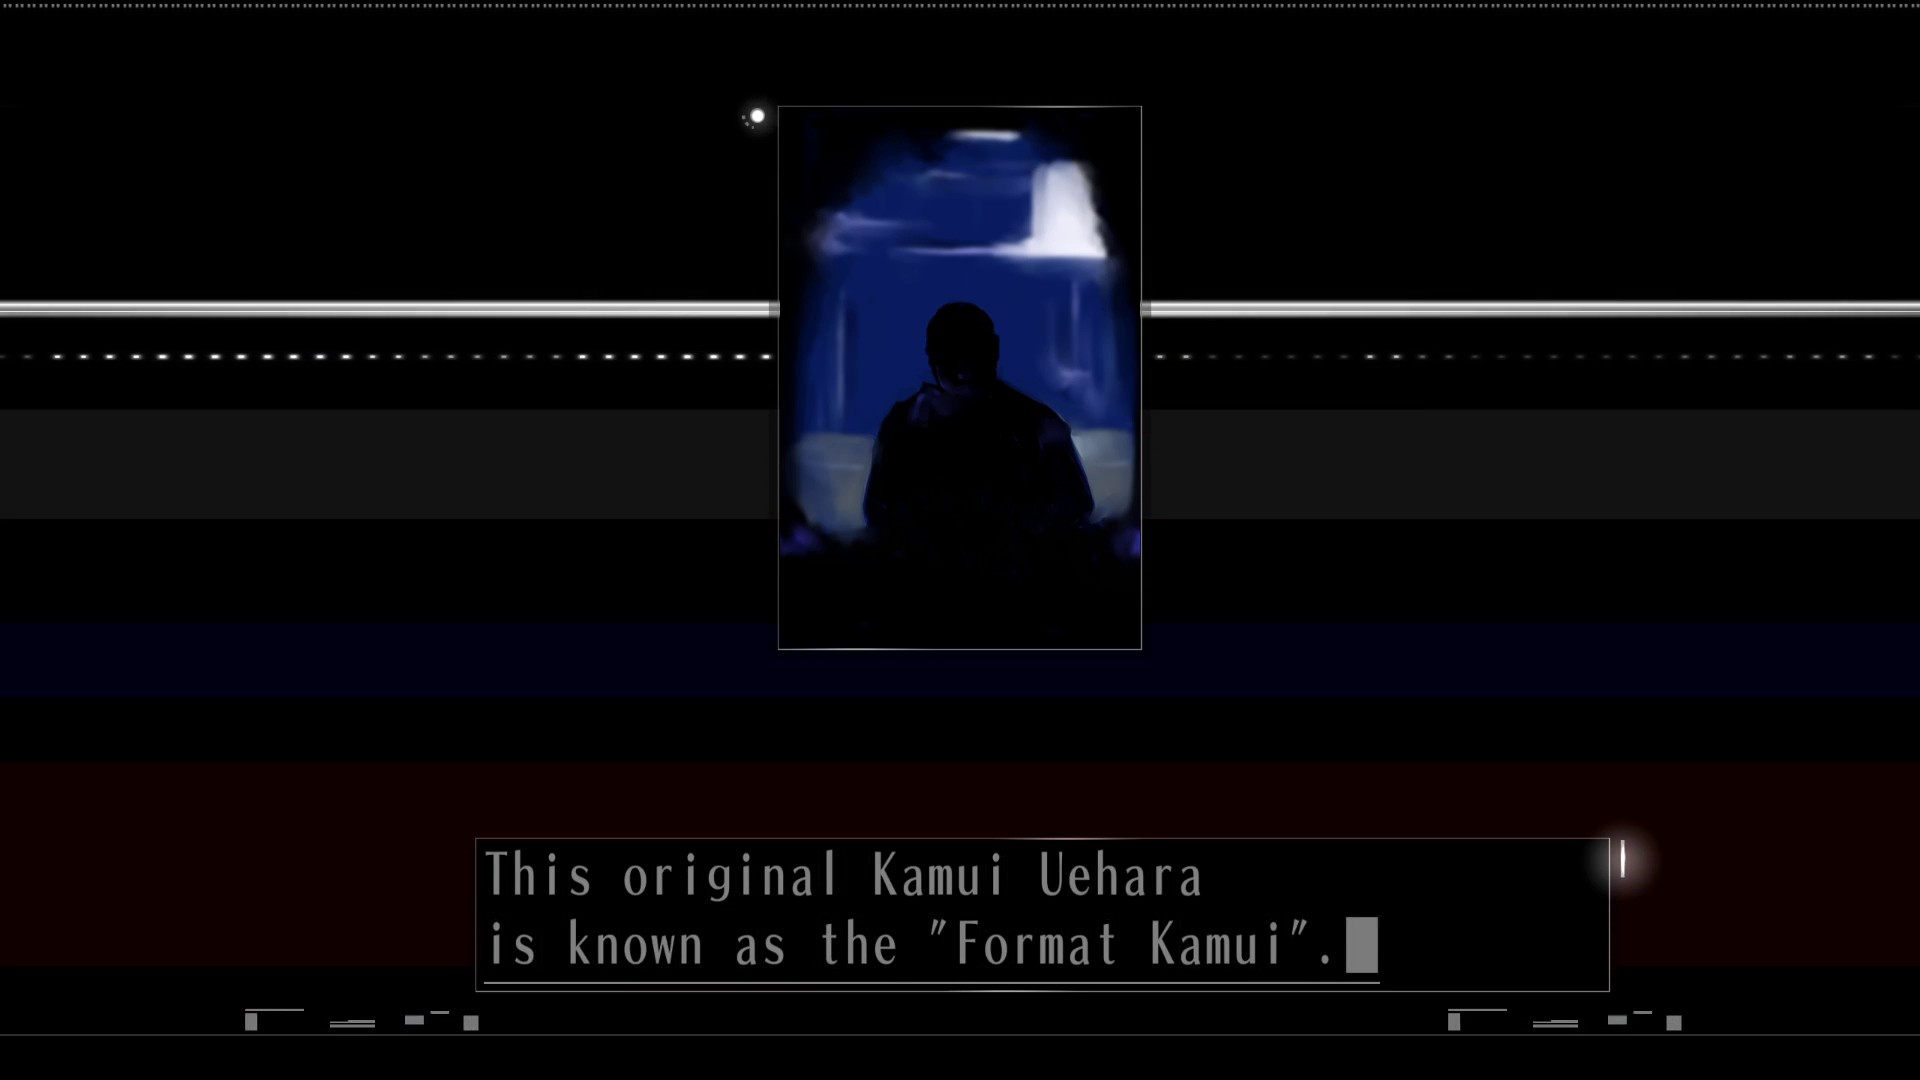 Screenshot from "HIKARI." Uminosuke says, "This original Kamui Uehara is known as the 'Format Kamui'."